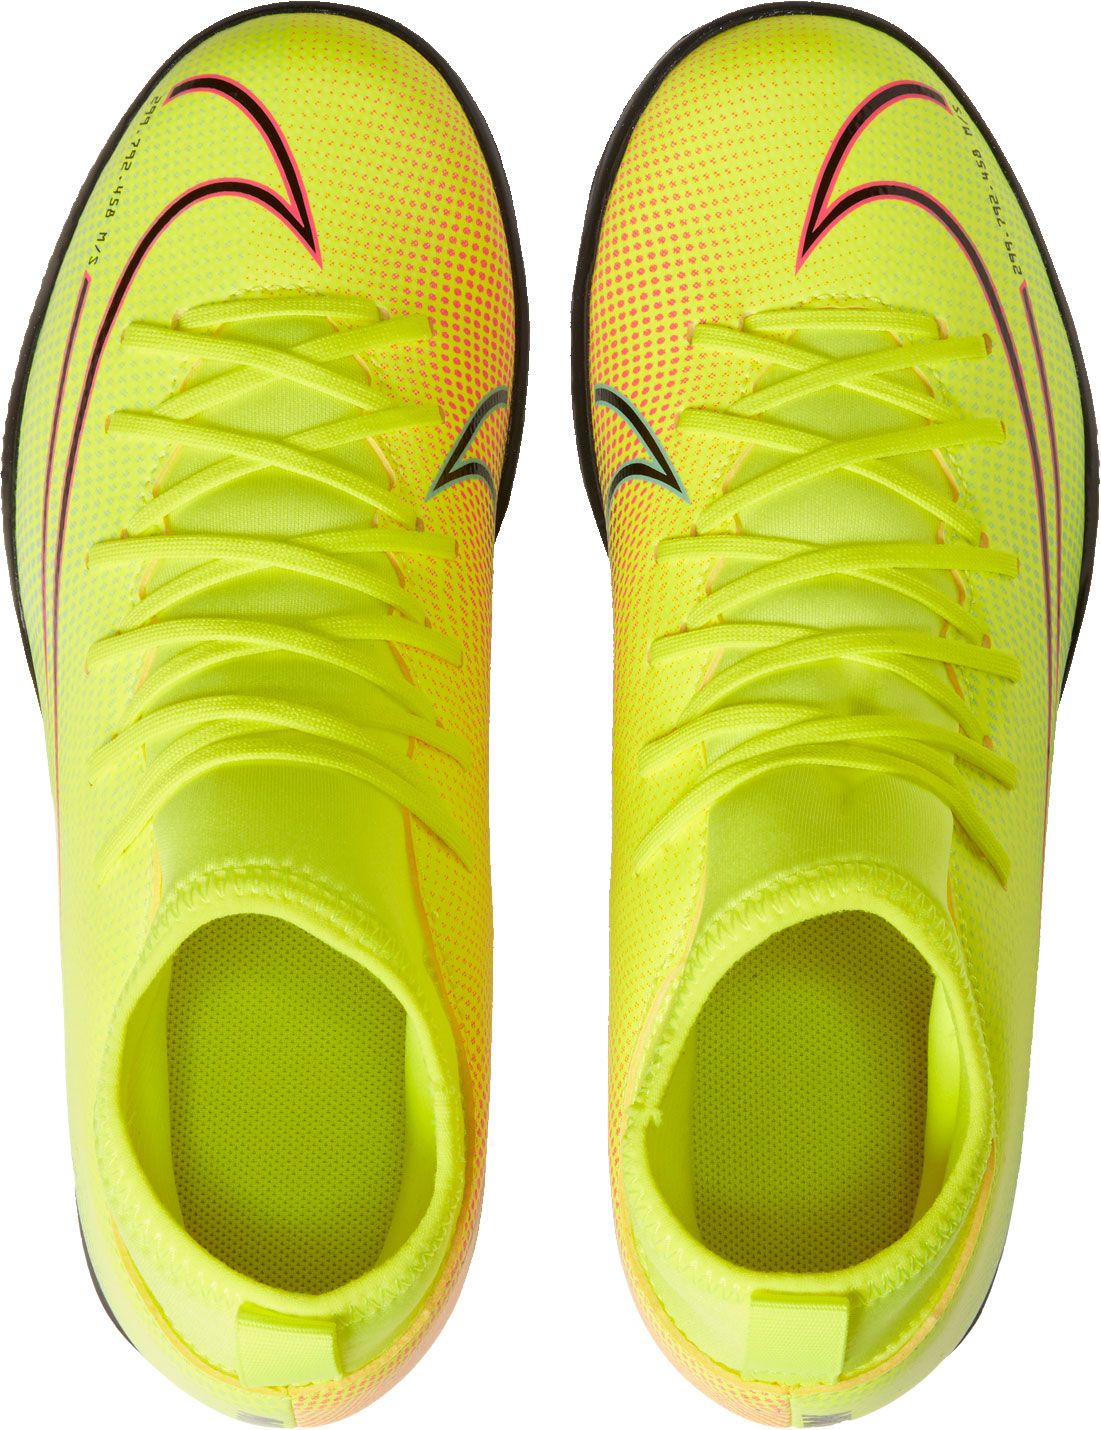 Nike Superfly 6 Club Tf Halı Saha Ayakkabısı Ah7372 077.